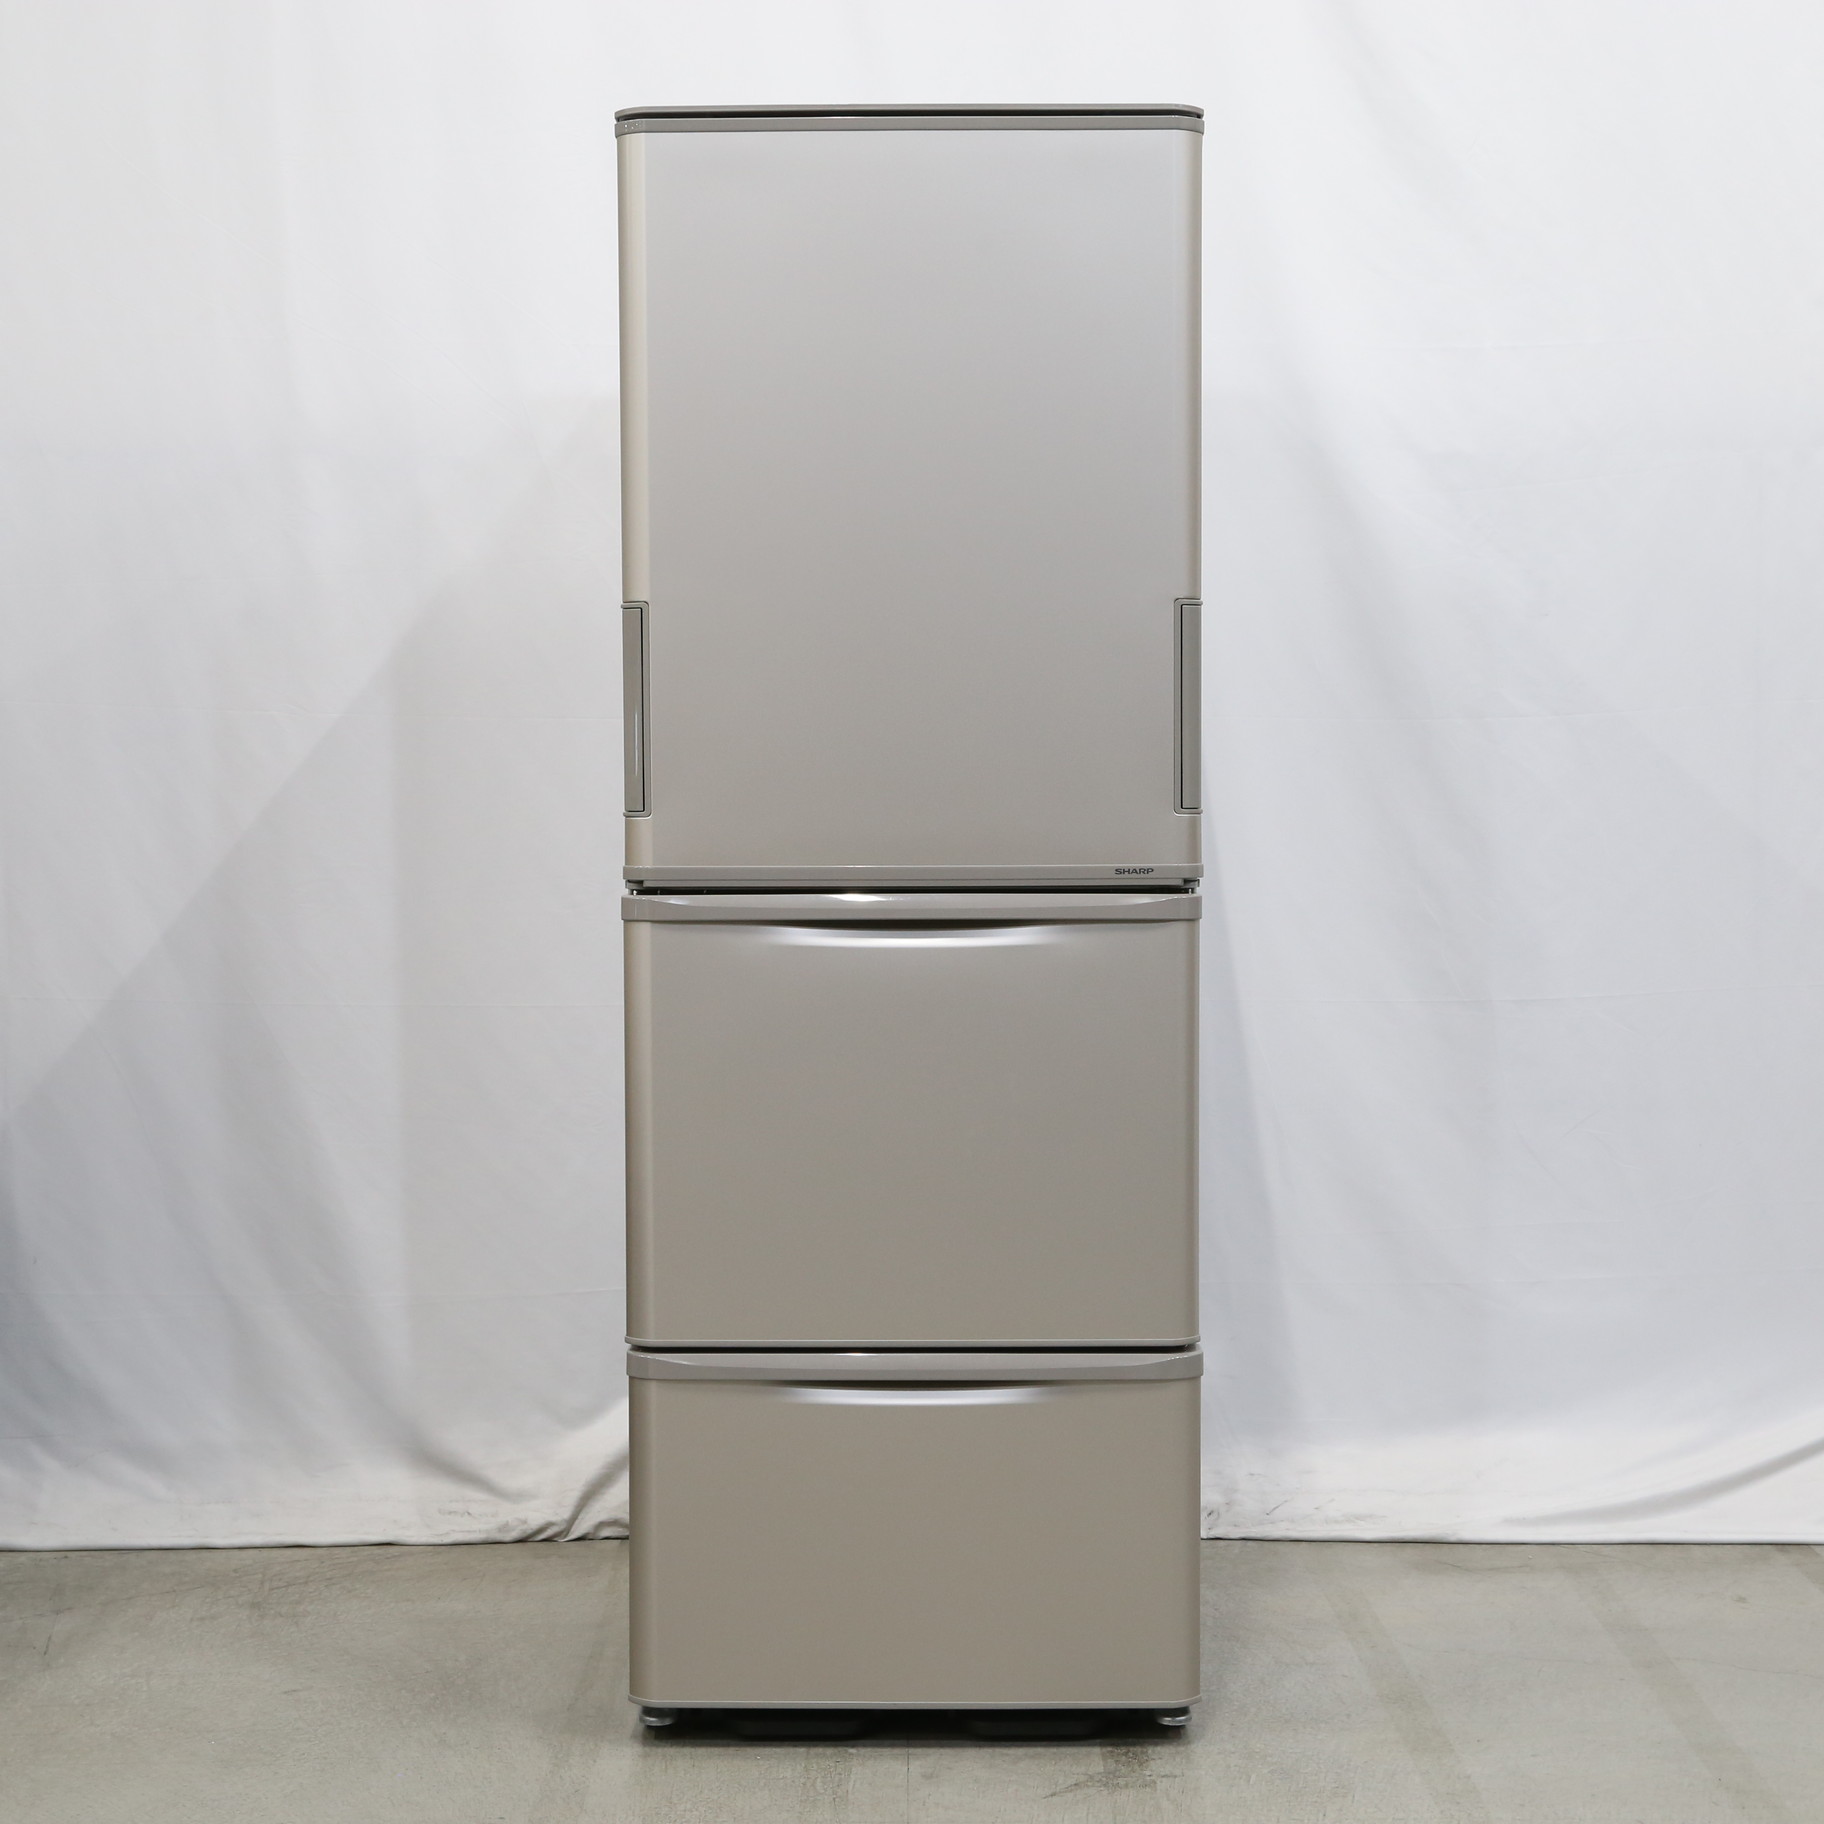 SHARP 大型 ノンフロン冷凍冷蔵庫 SJ-W353G - 冷蔵庫